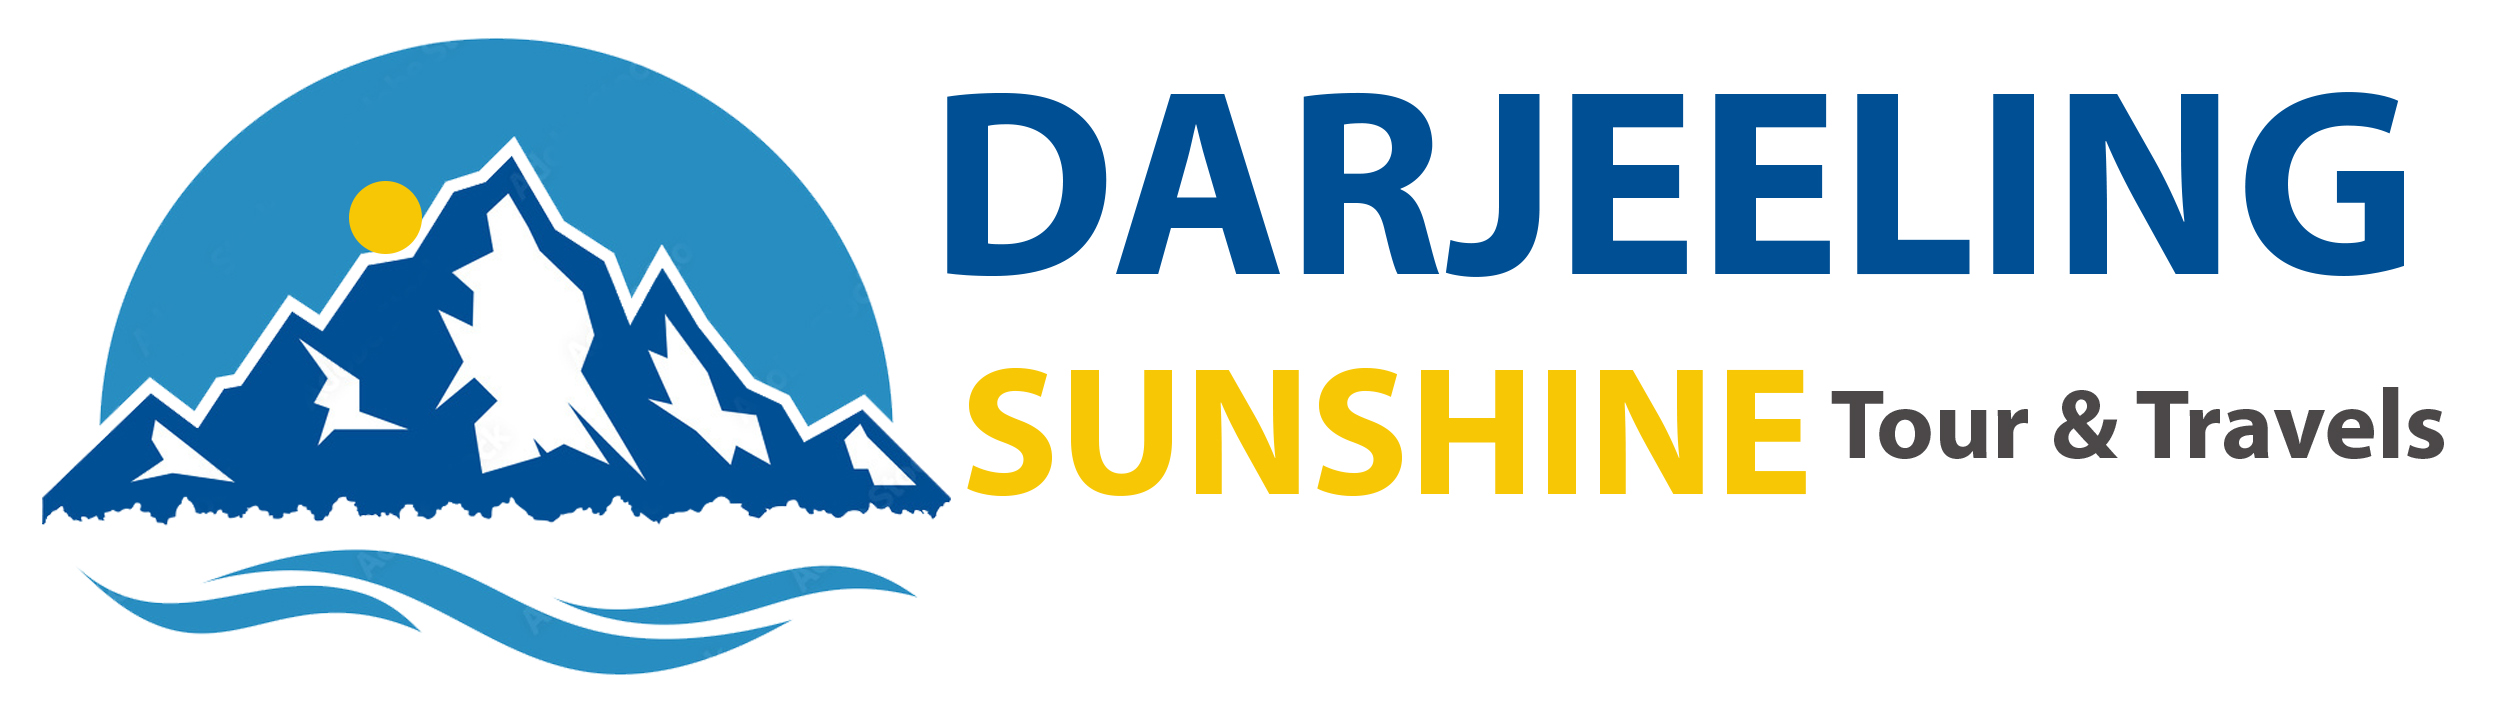 Darjeeling Sunshine Tour & Travels